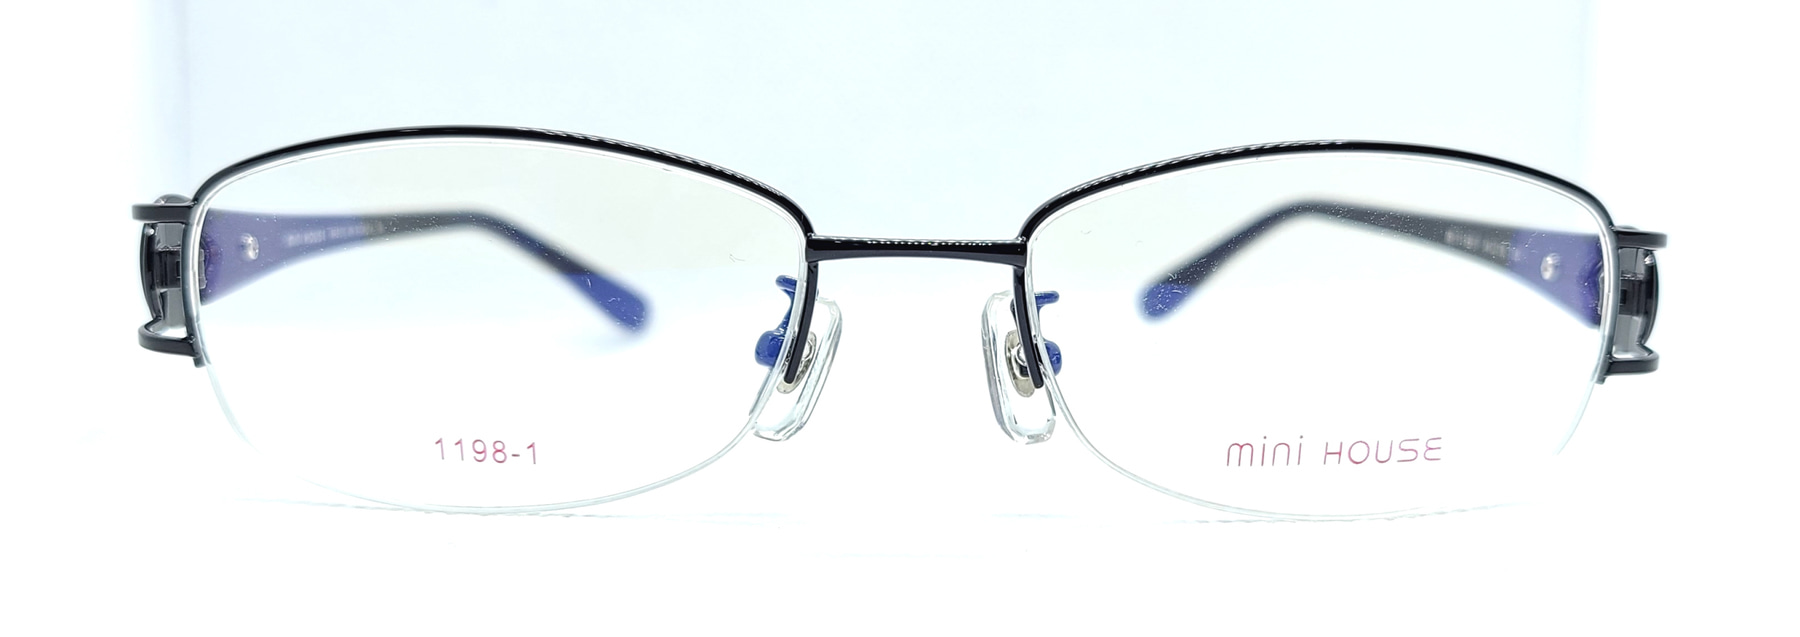 MINIHOUSE M-1198-1, Korean glasses, sunglasses, eyeglasses, glasses